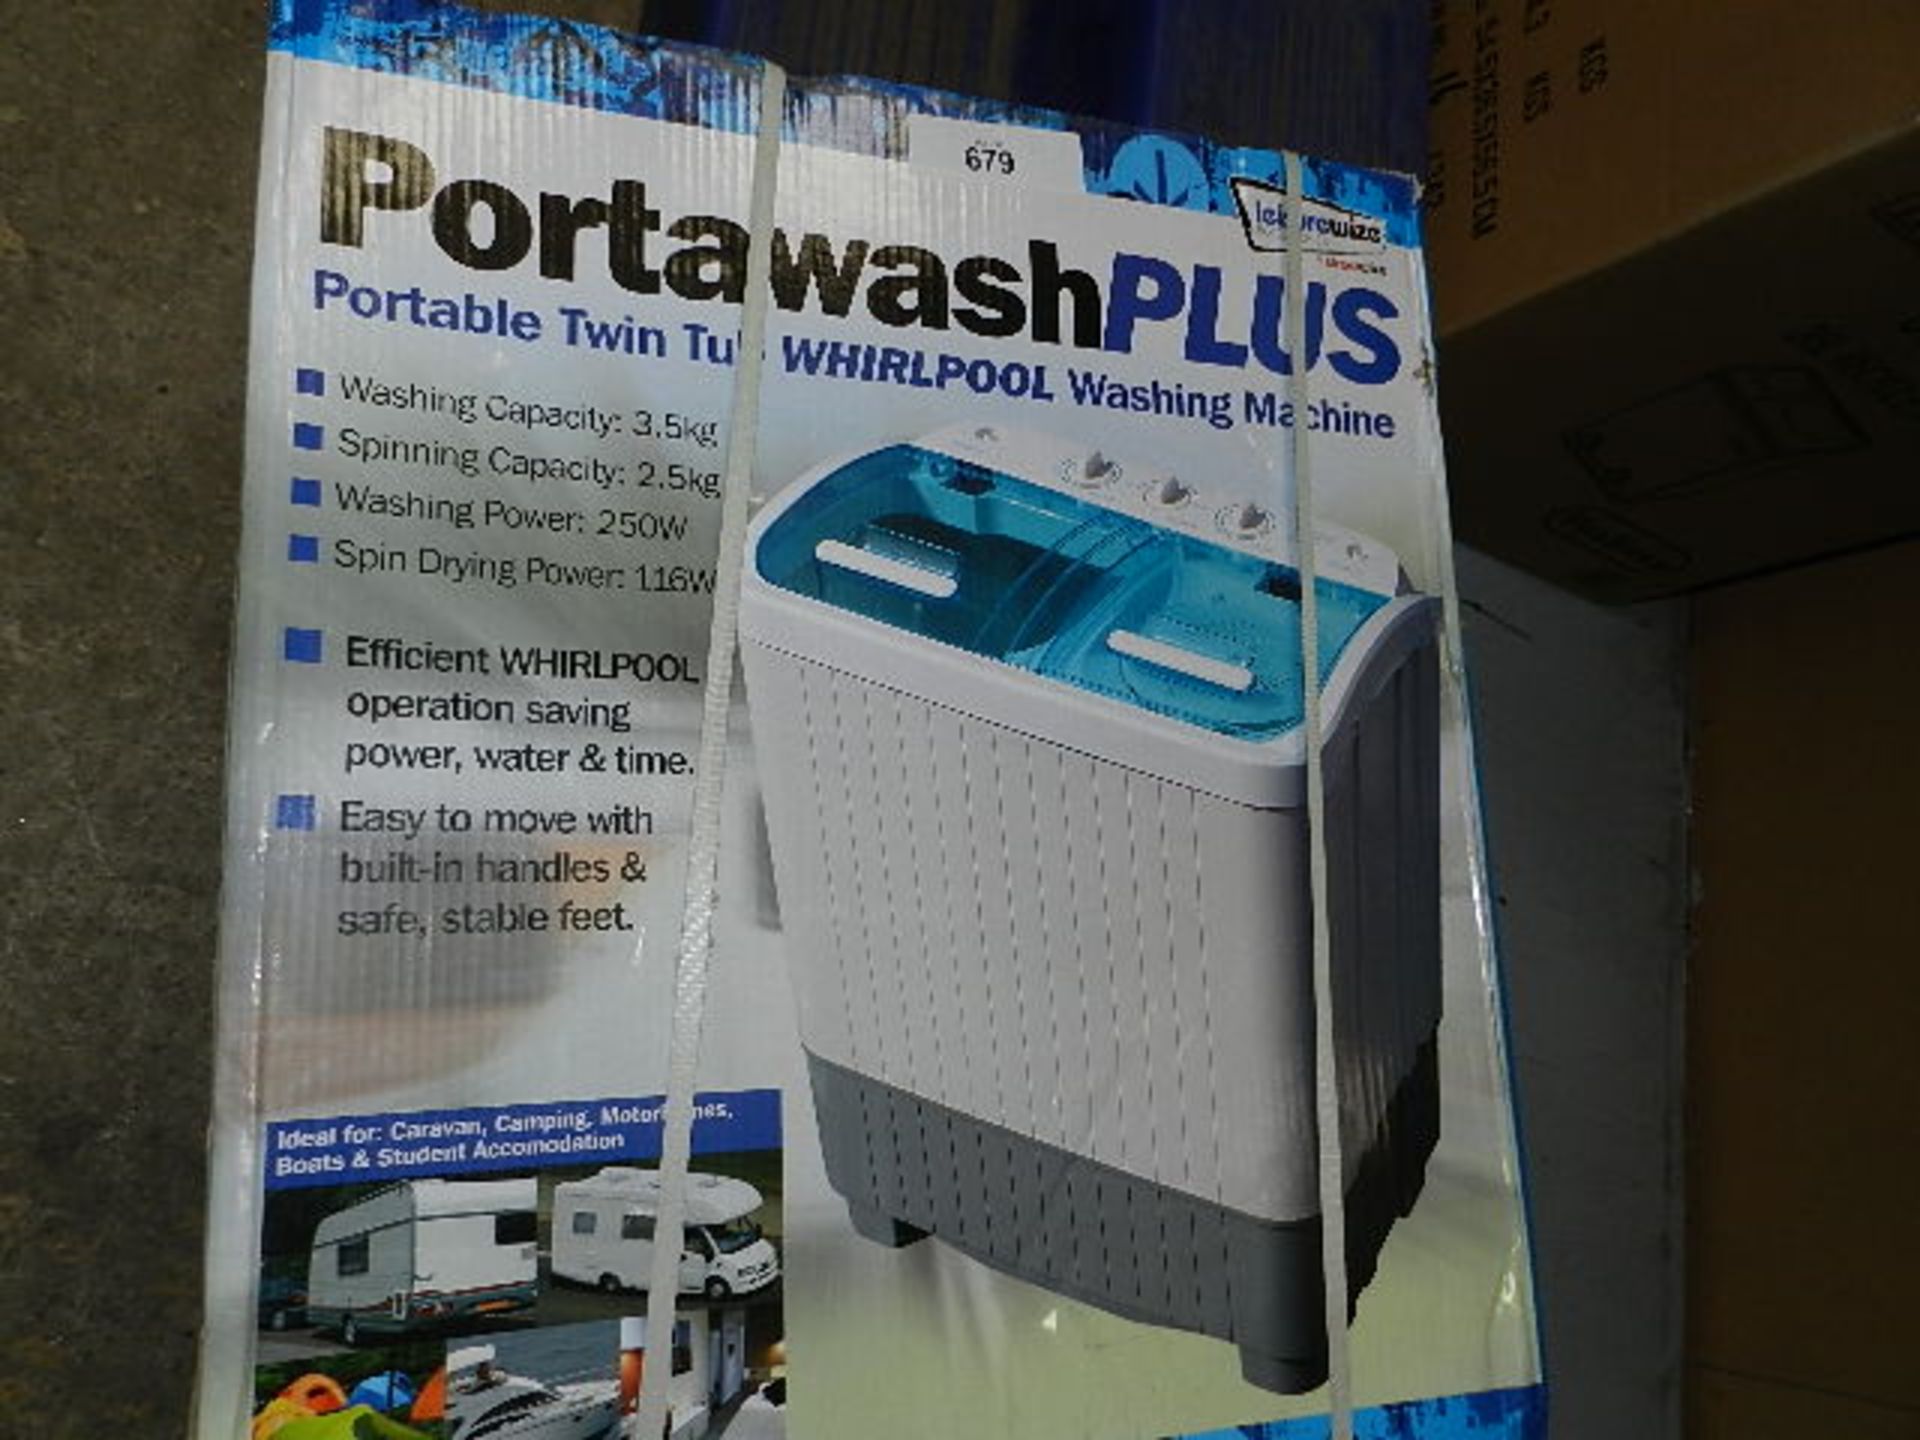 A Leisurewize Portawash plus portable twin-tub Whirlpool washing machine, model no. LWACC421 - New